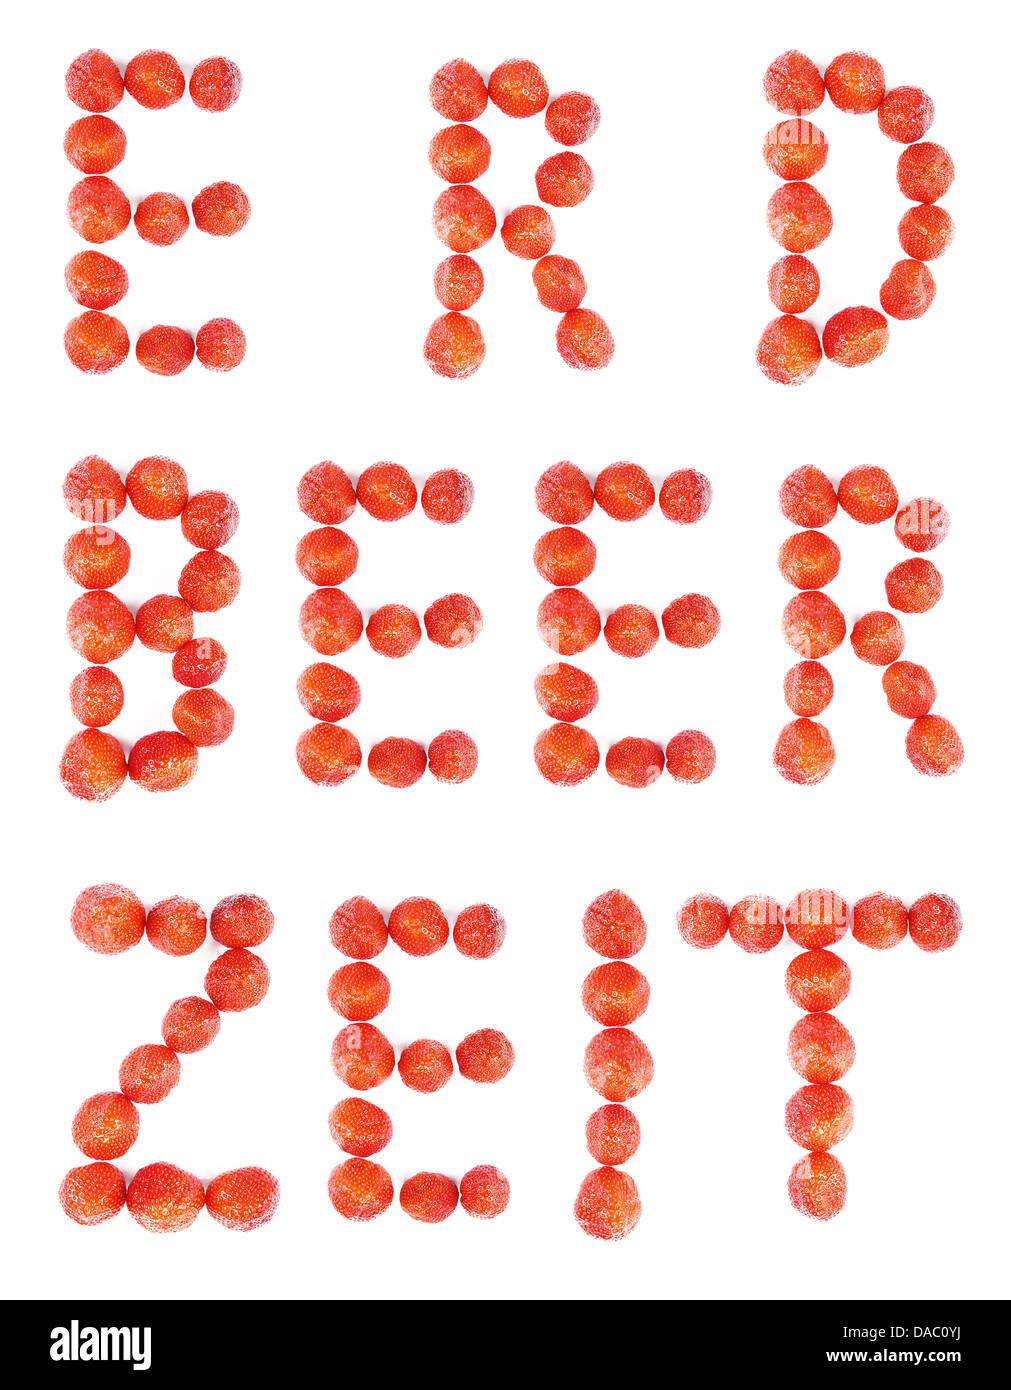 the german word Erdbeerzeit layed out using fresh strawberries Stock Photo